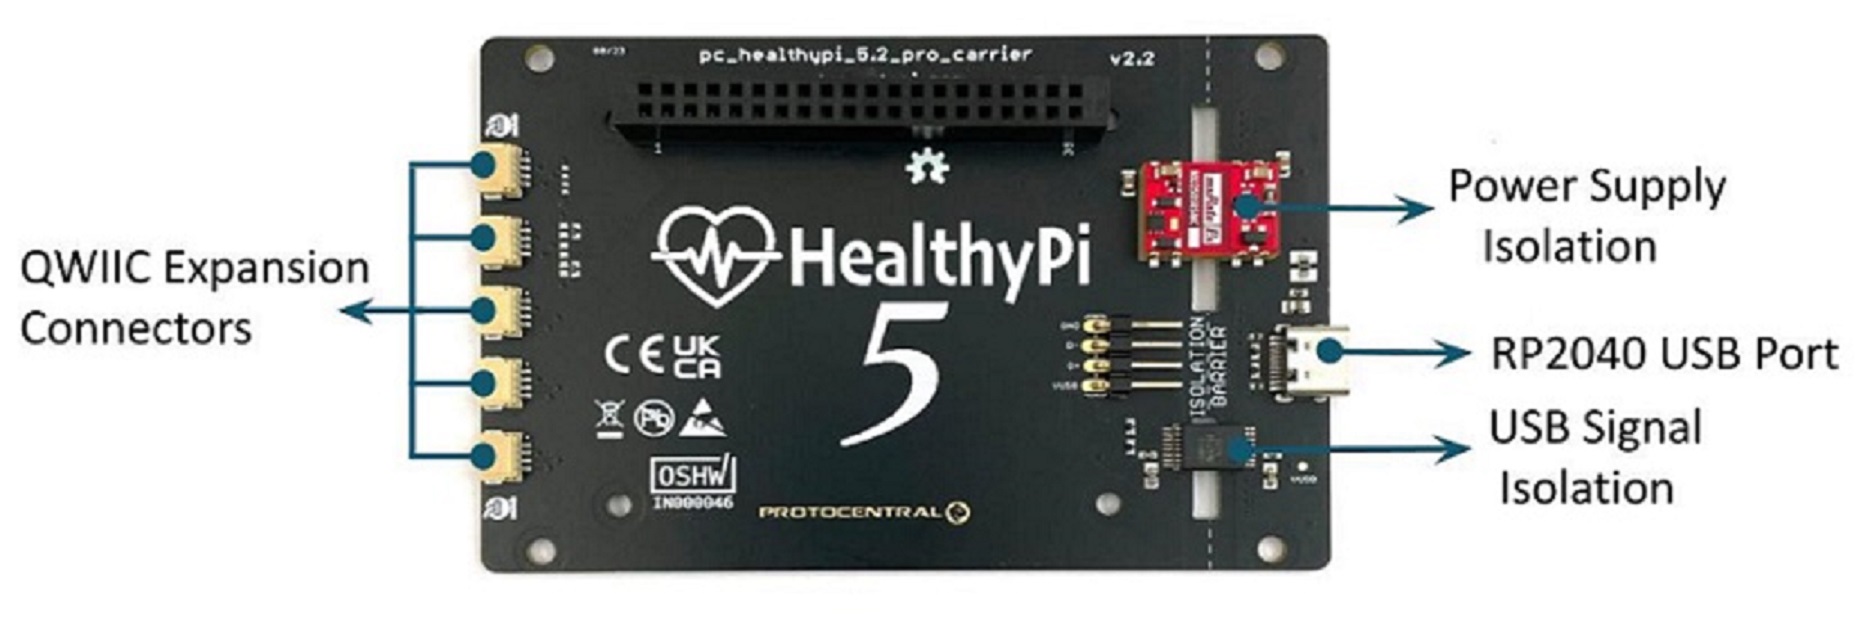 Healthypi 5 Pro Carrier Board